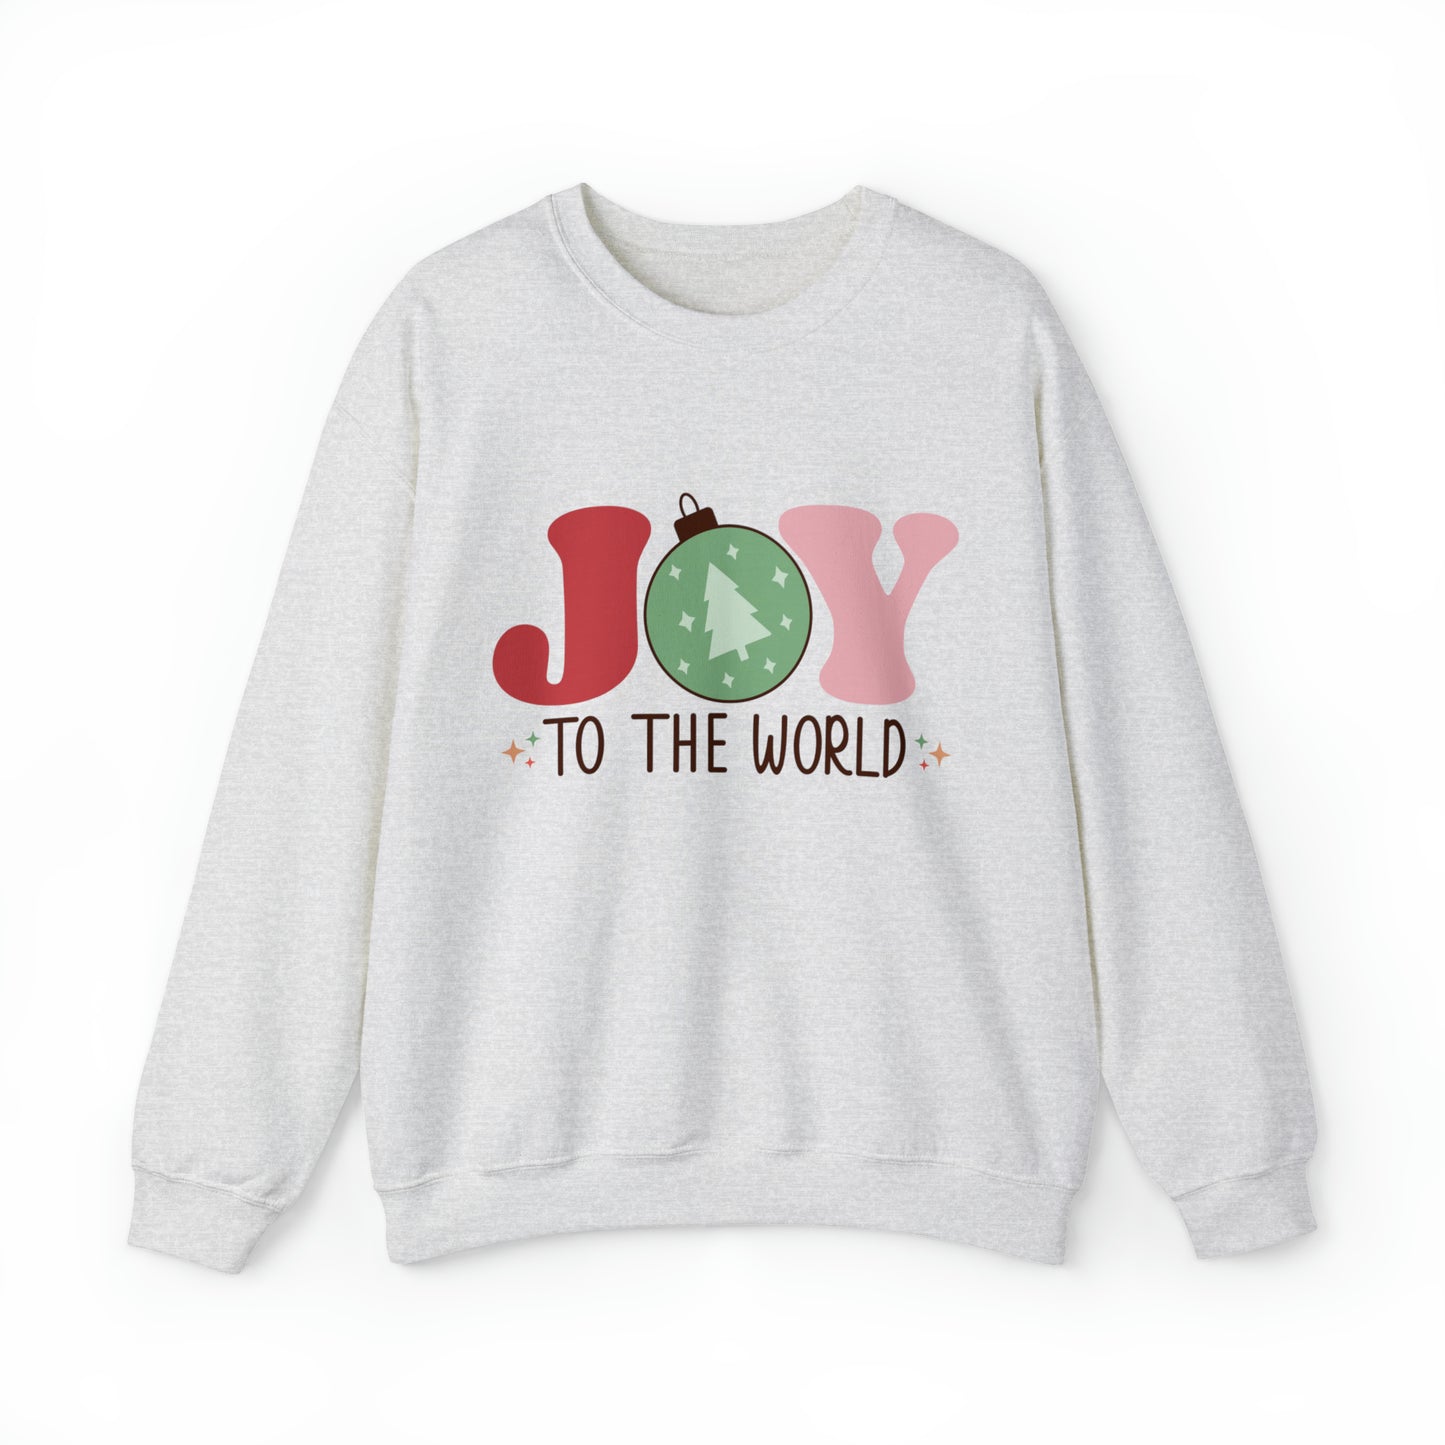 Joy to the world Women's Crewneck Sweatshirt